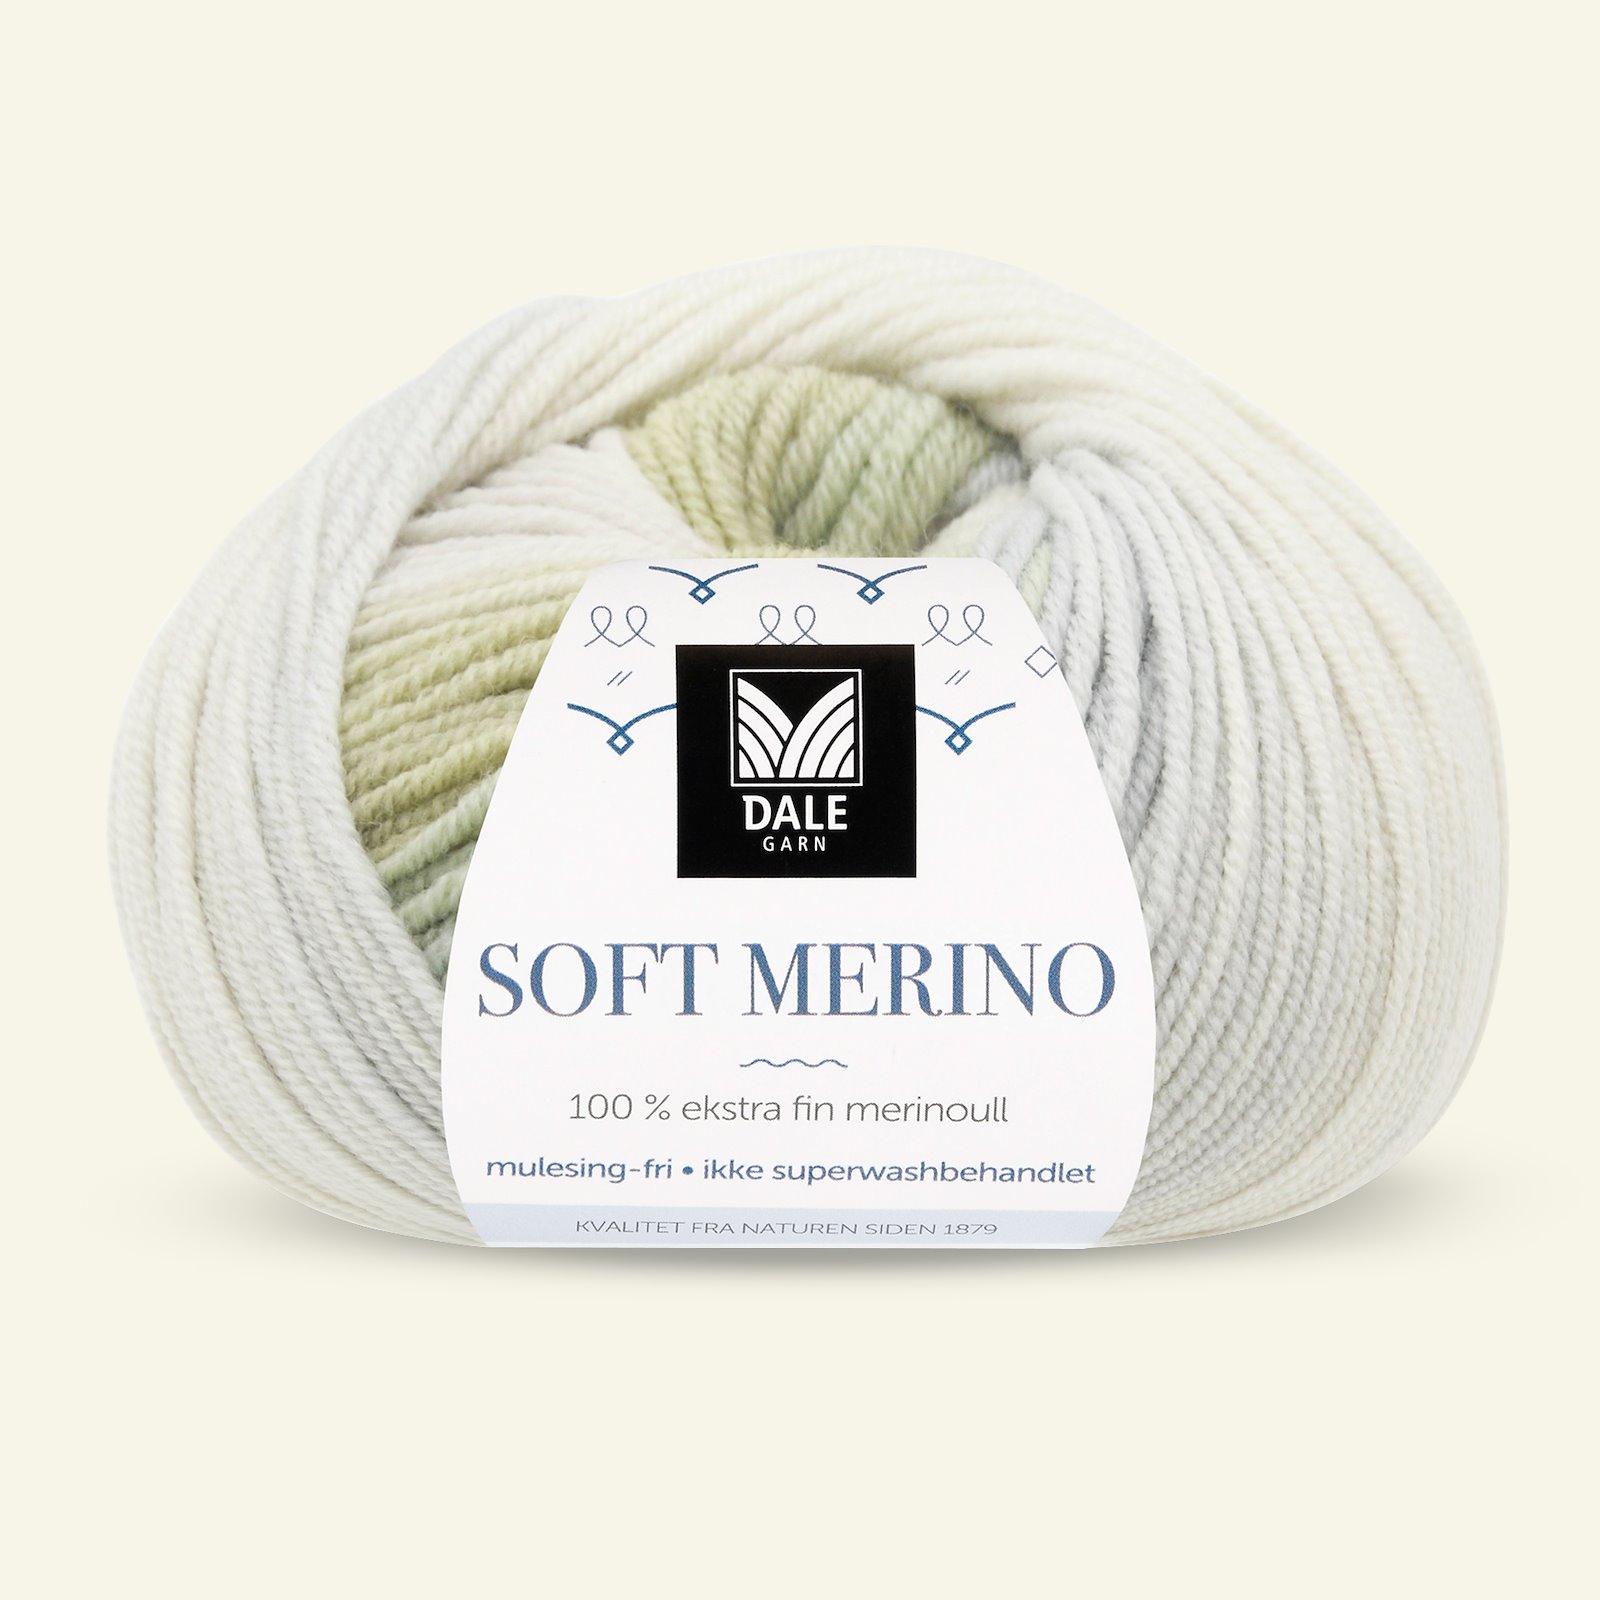 Dale Garn, 100% ekstra fint merinogarn "Soft Merino", Mint print 90001223_pack